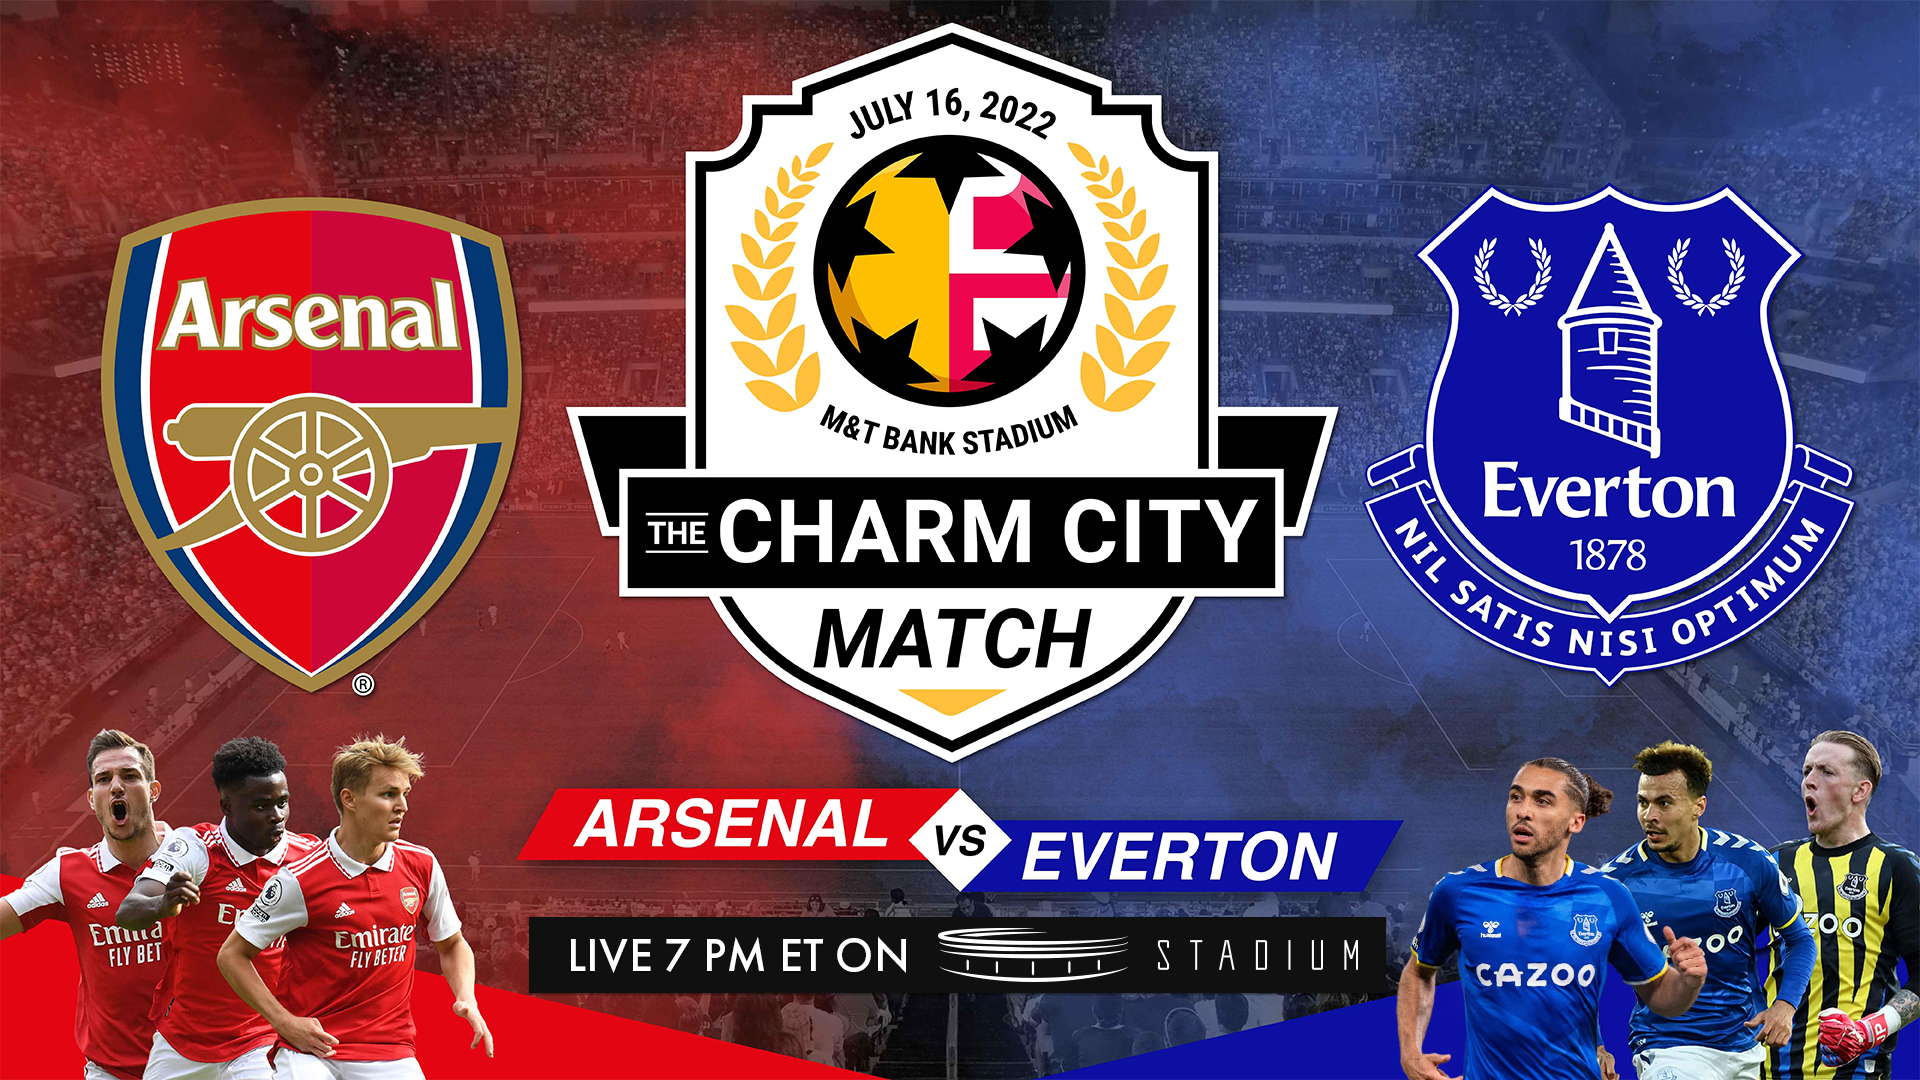 The Charm City Match Everton vs Arsenal